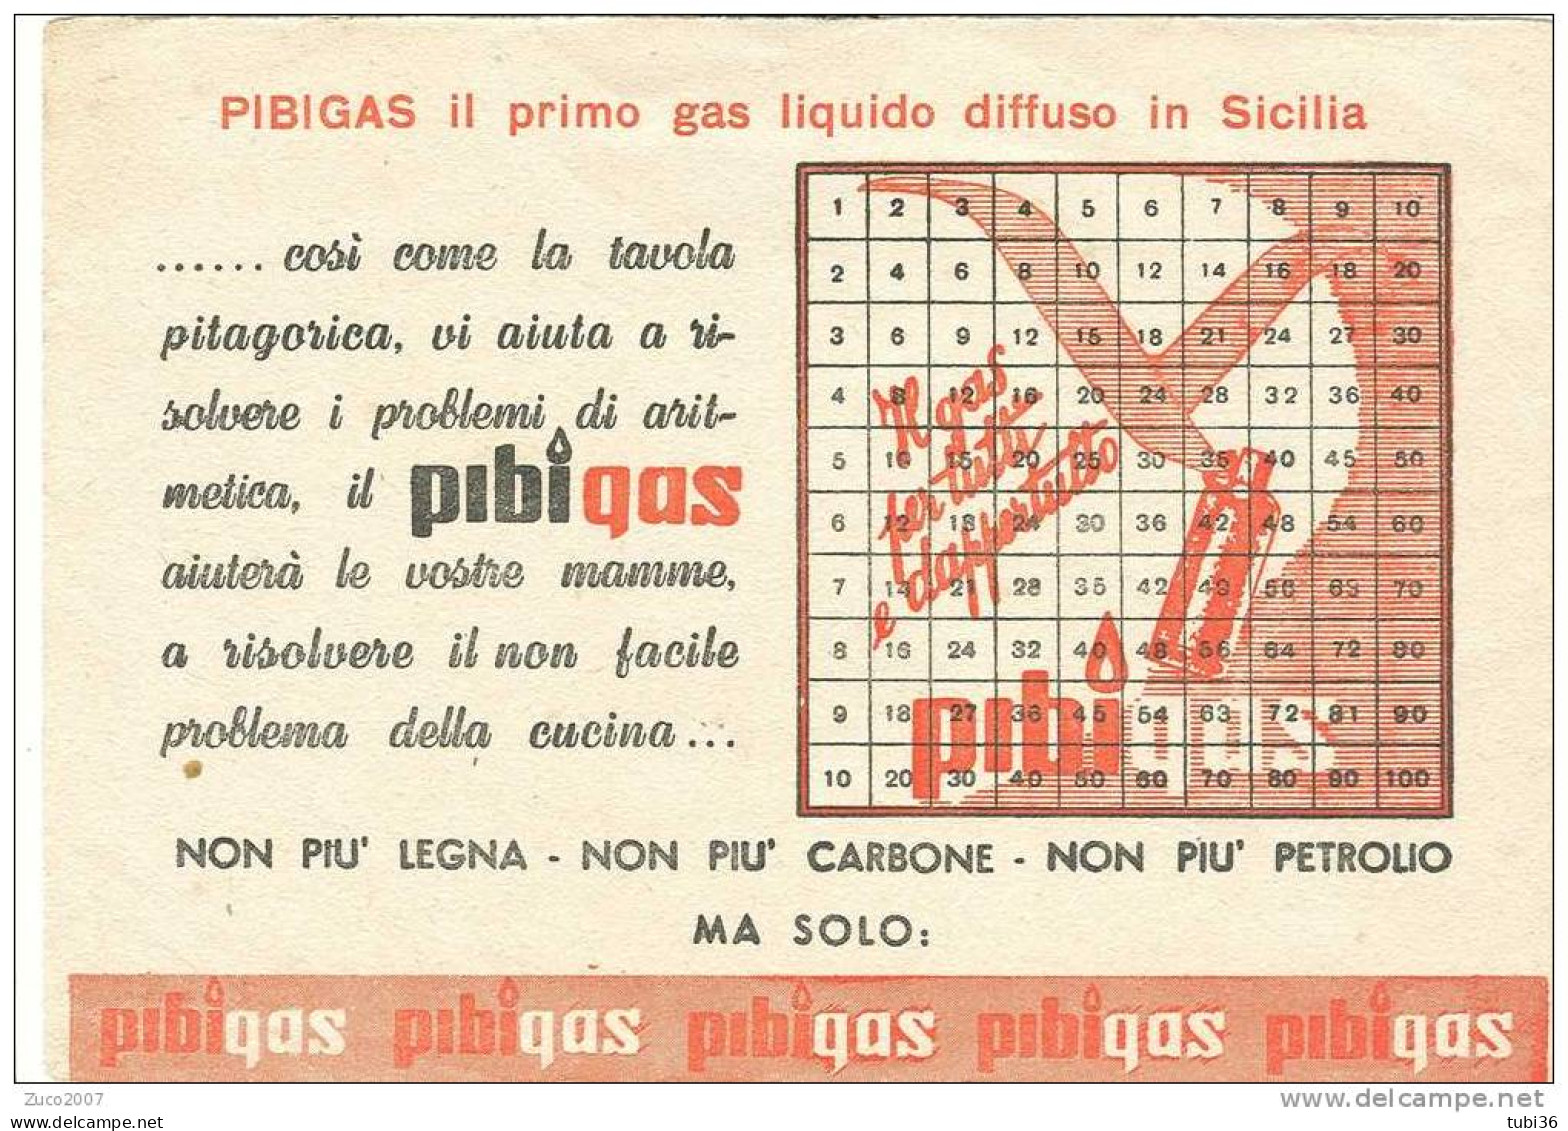 PIBIGAS - CARTA PUBBLICITARIA  DIFFUSIONE GAS IN SICILIA. - Electricity & Gas